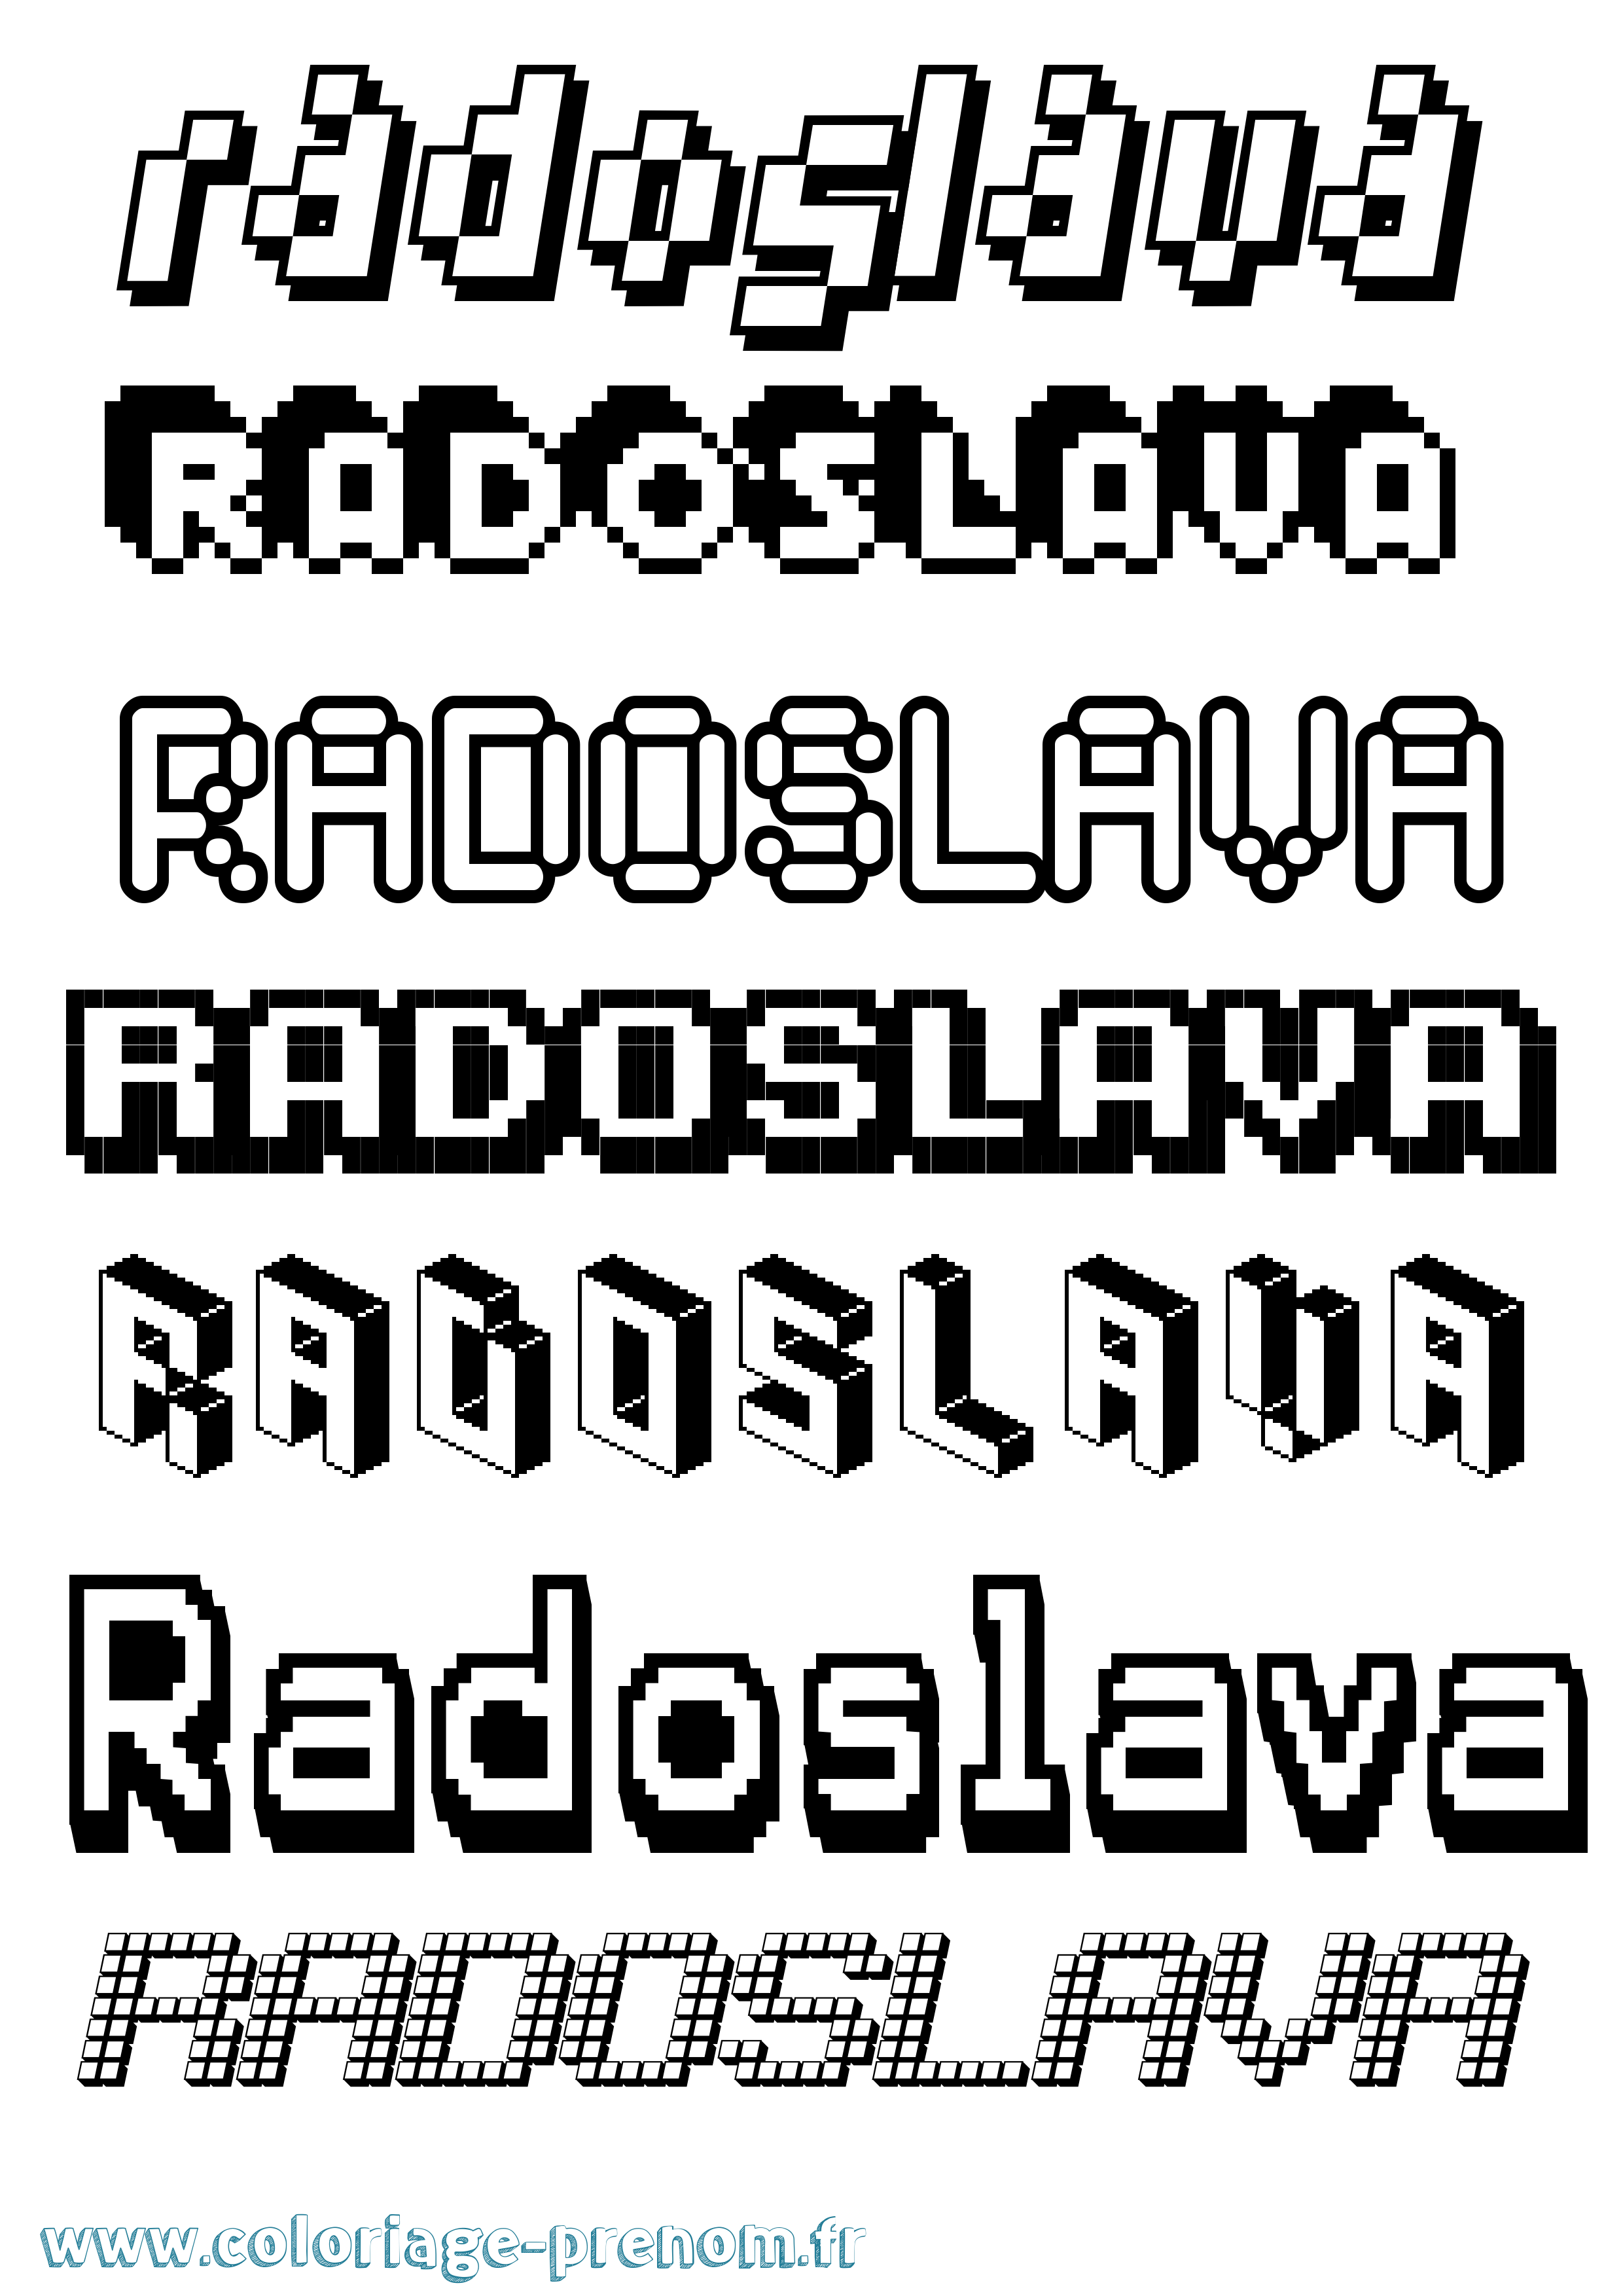 Coloriage prénom Radoslava Pixel